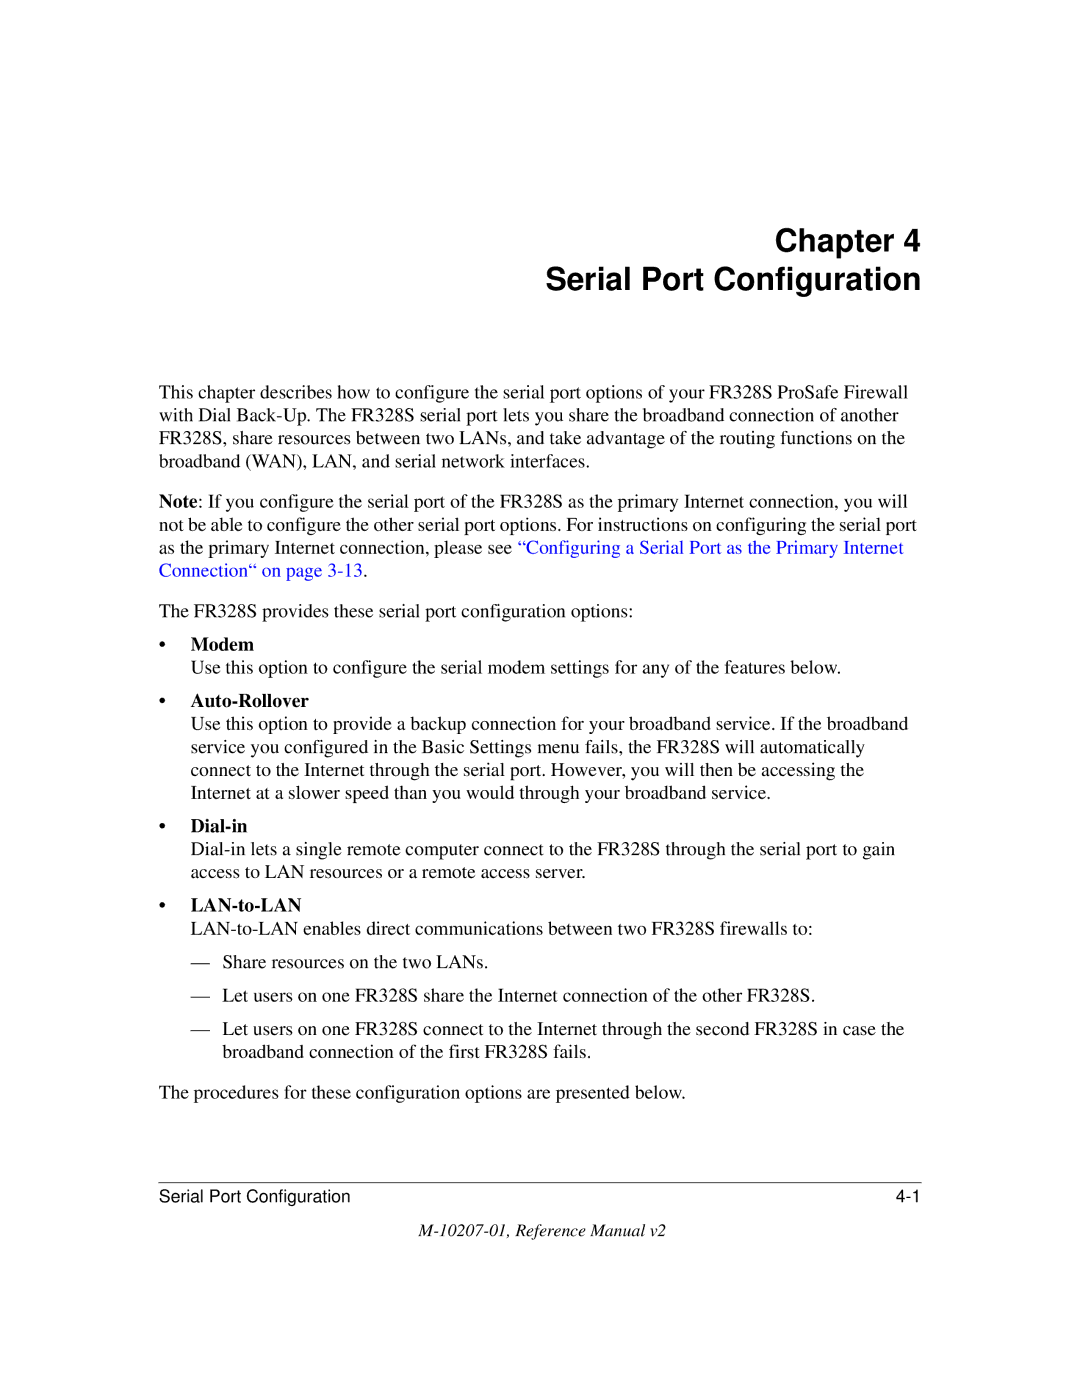 NETGEAR FR328S manual Chapter Serial Port Configuration, Auto-Rollover 